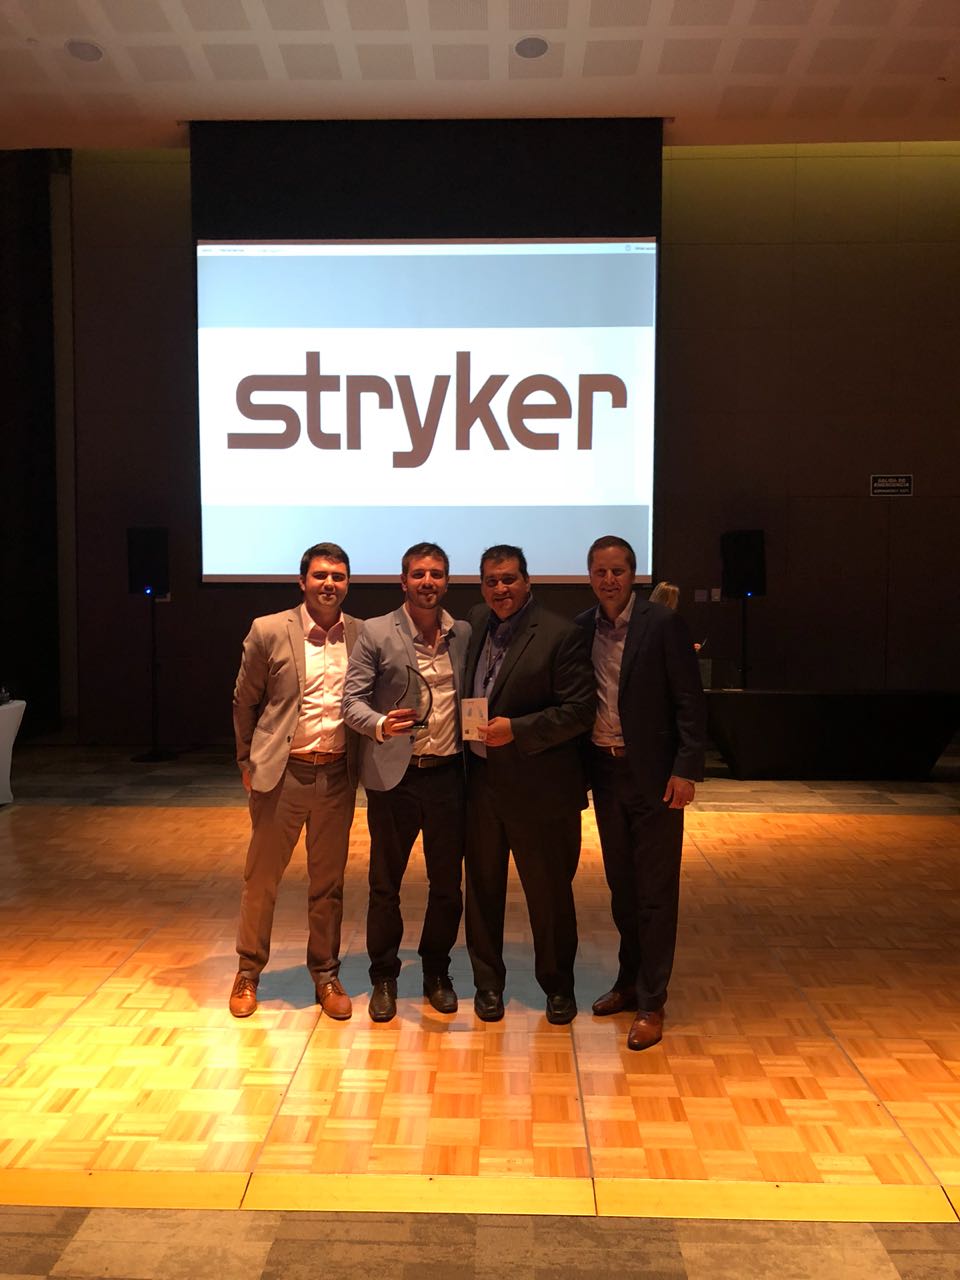 Macrosul na reunião anual de distribuidores da Stryker